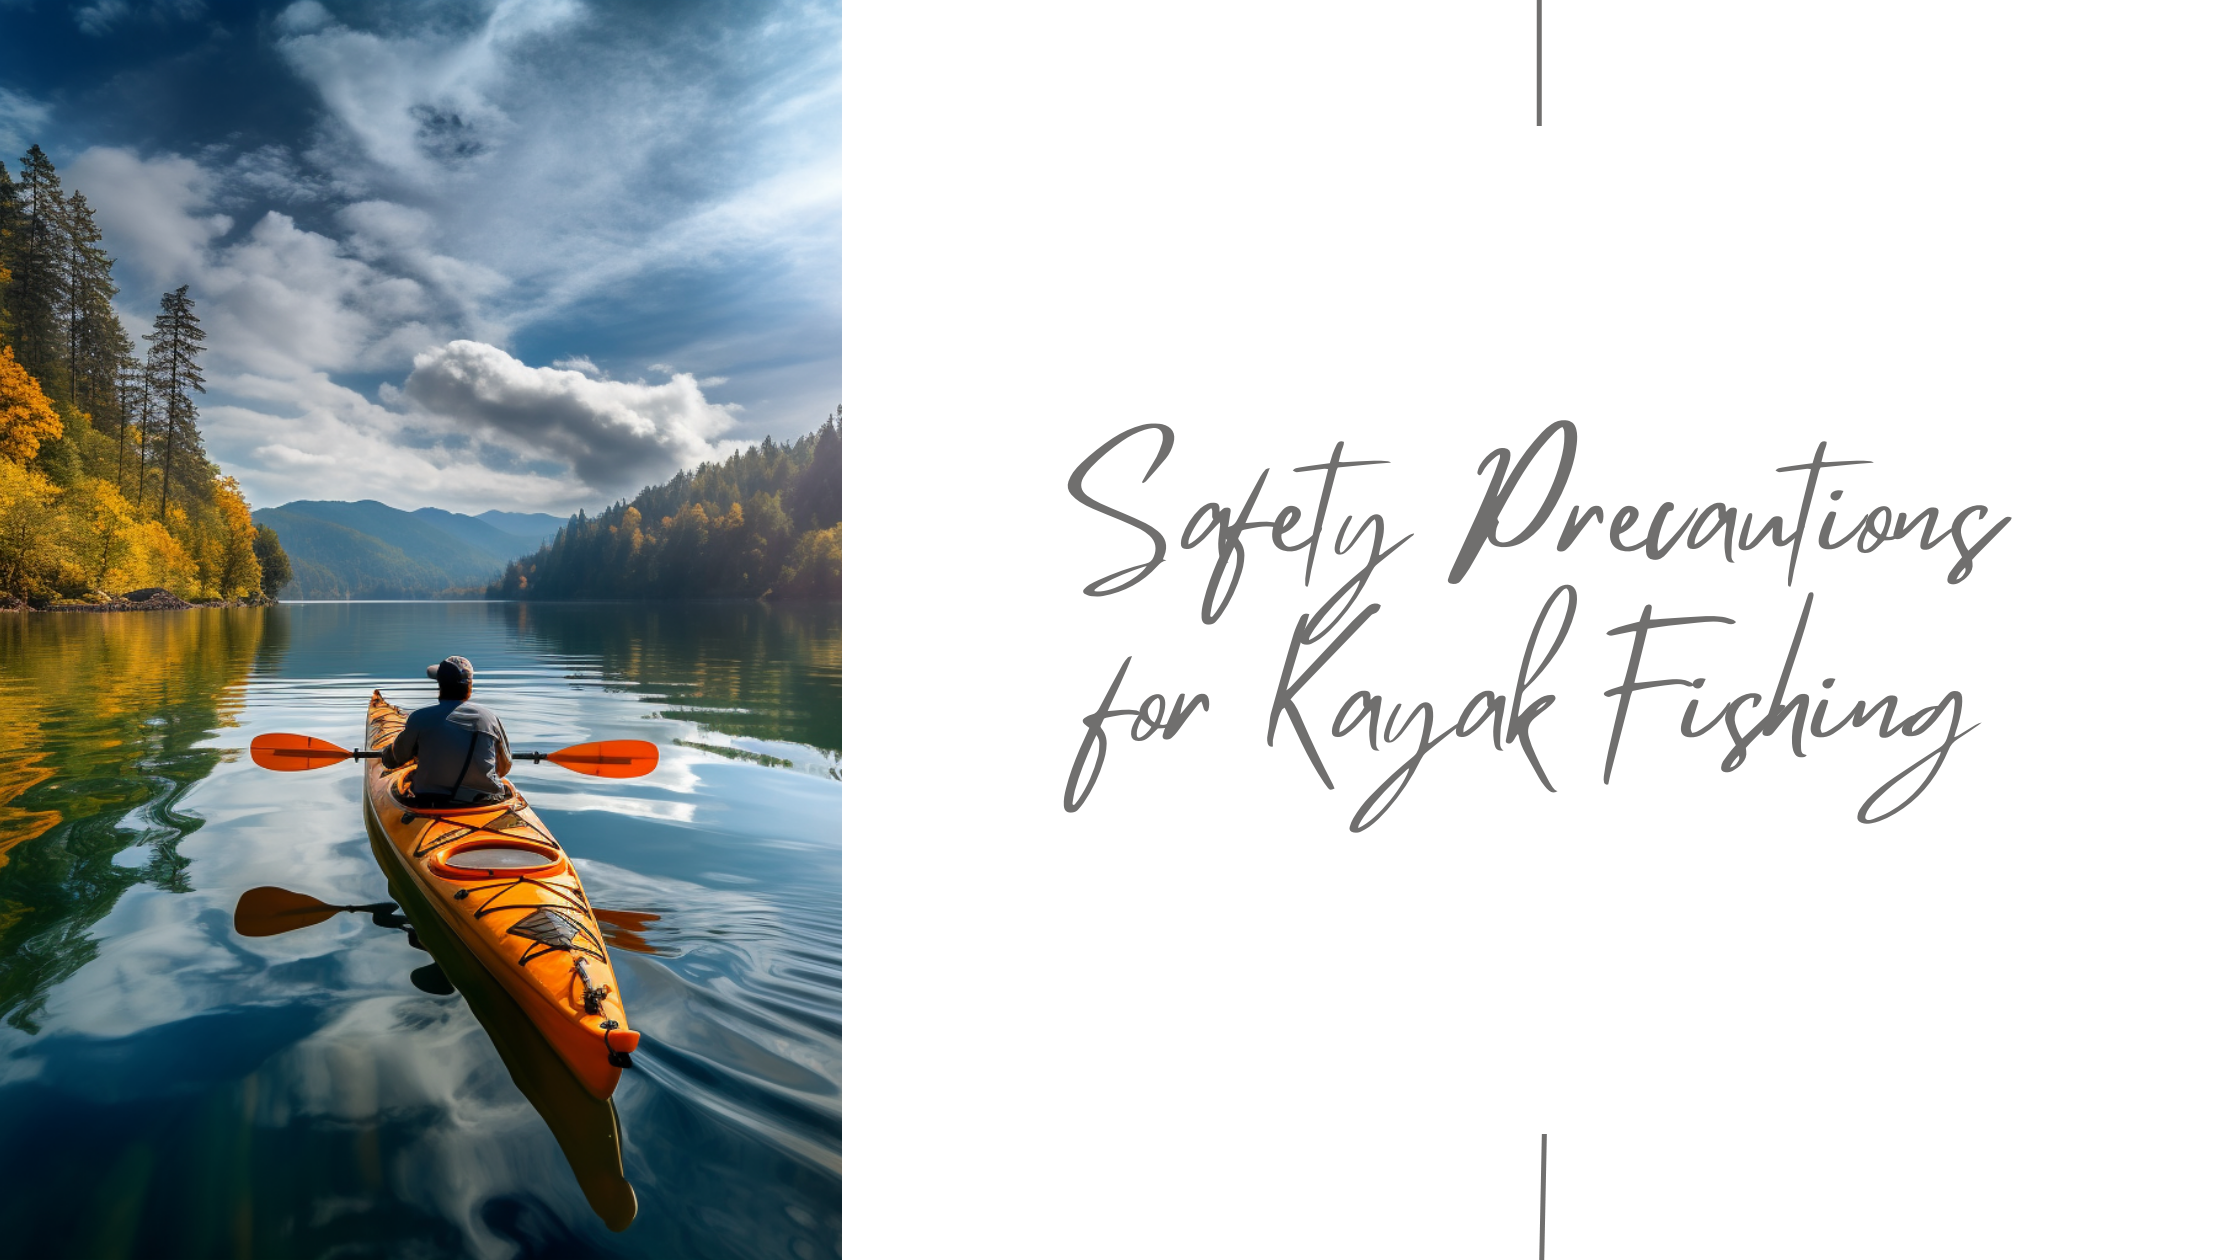 Kayak Safety Precautions